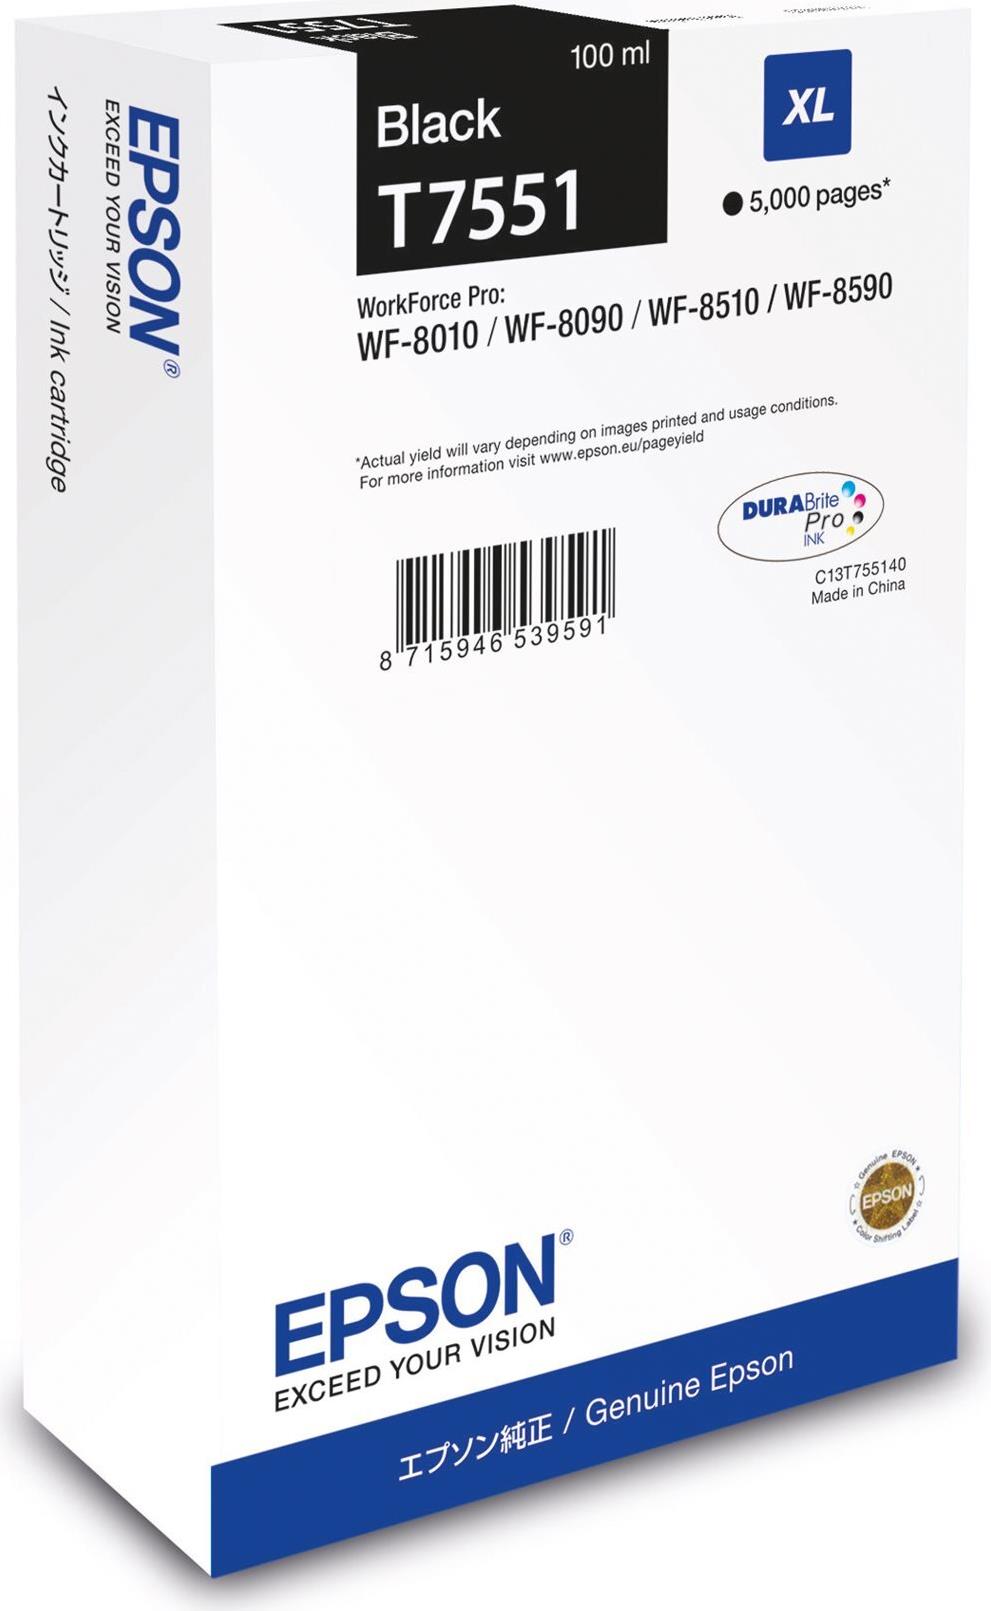 Epson Tinte schwarz 100.0ml WF Pro 8xxx''XL'' (C13T75514N)